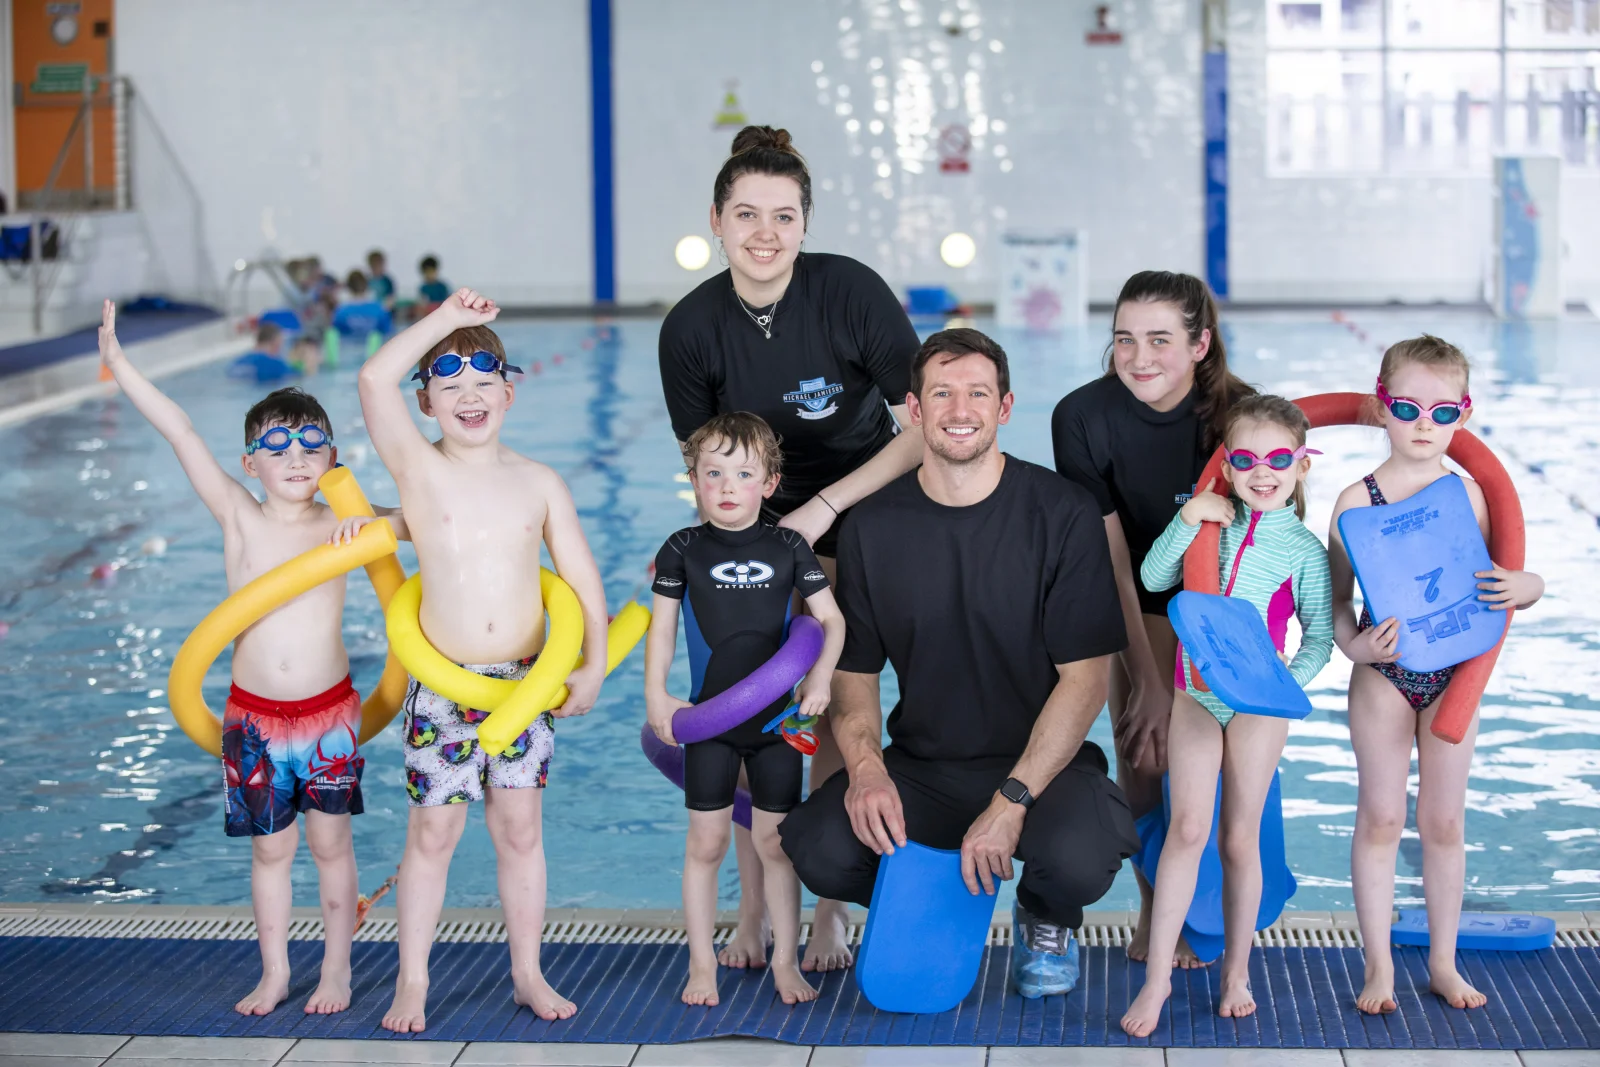 Leading Scottish Swim Academy looks set to make a splash in Edinburgh